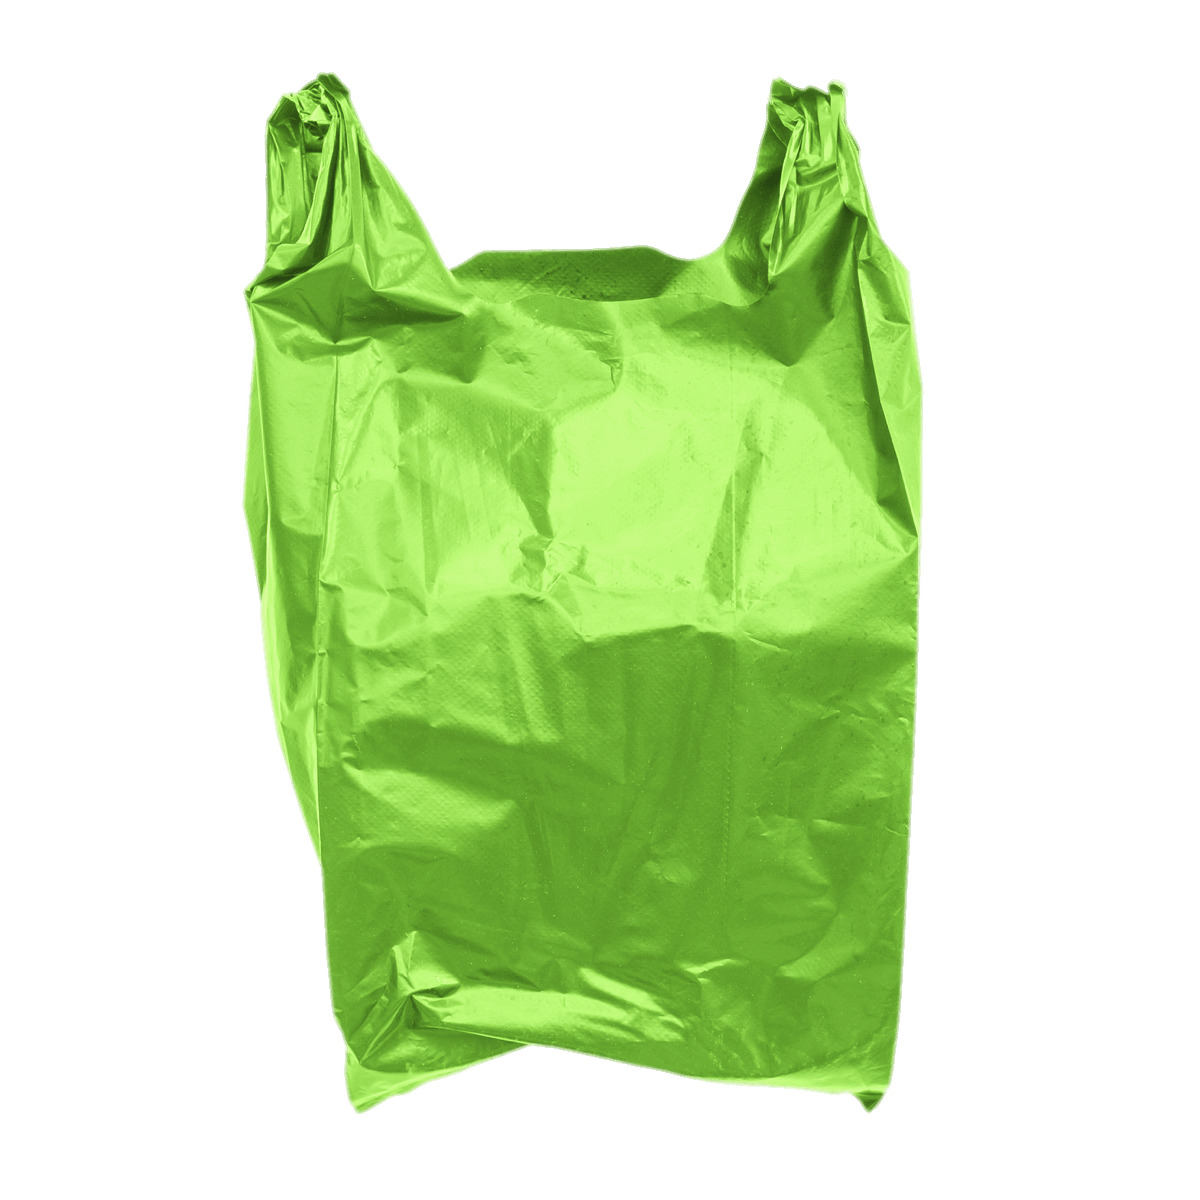 Plastic Bag Green icons